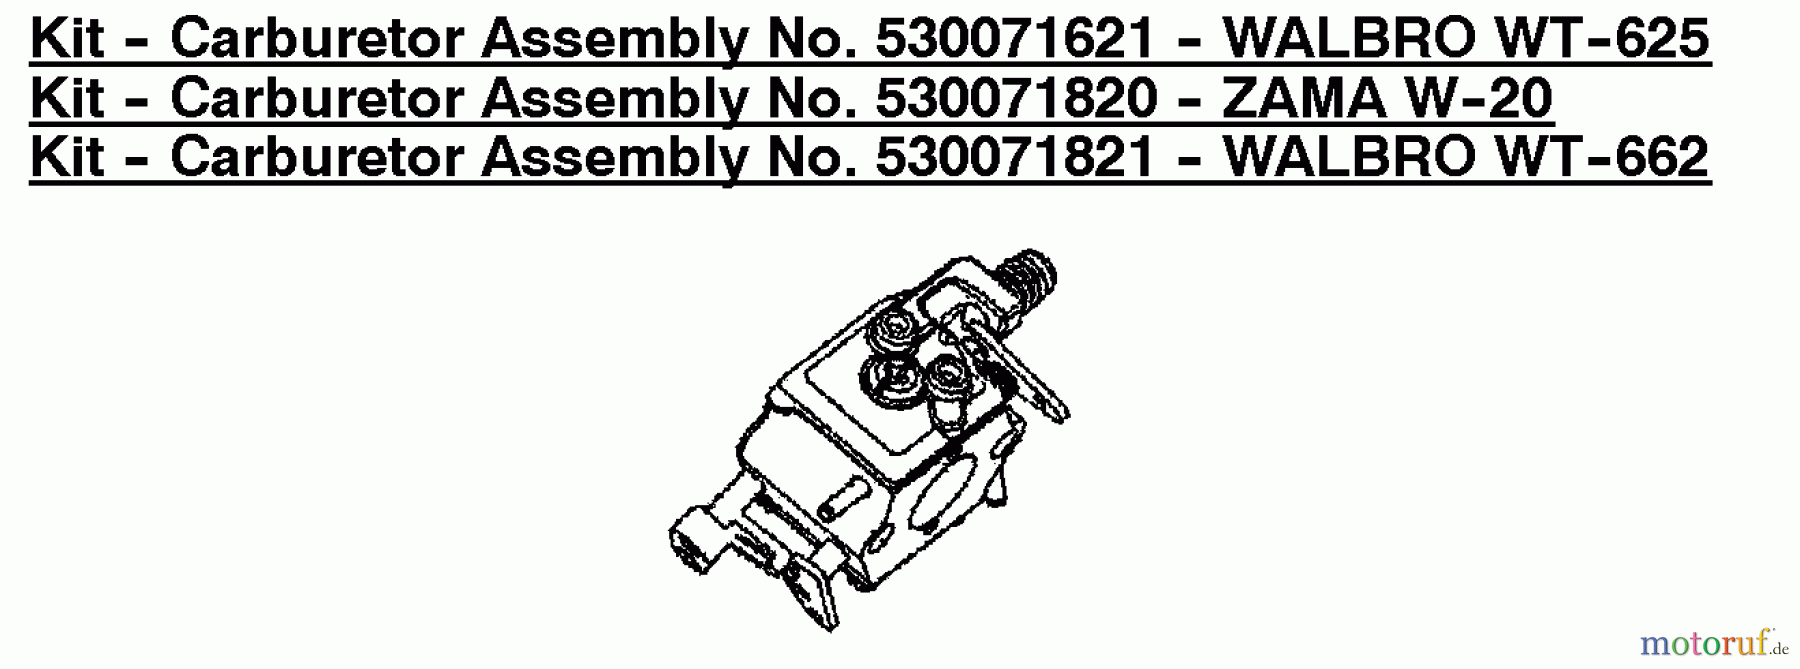  Poulan / Weed Eater Motorsägen PP220 (Type 3) - Poulan Pro Chainsaw Kit - Carburetor Assembly